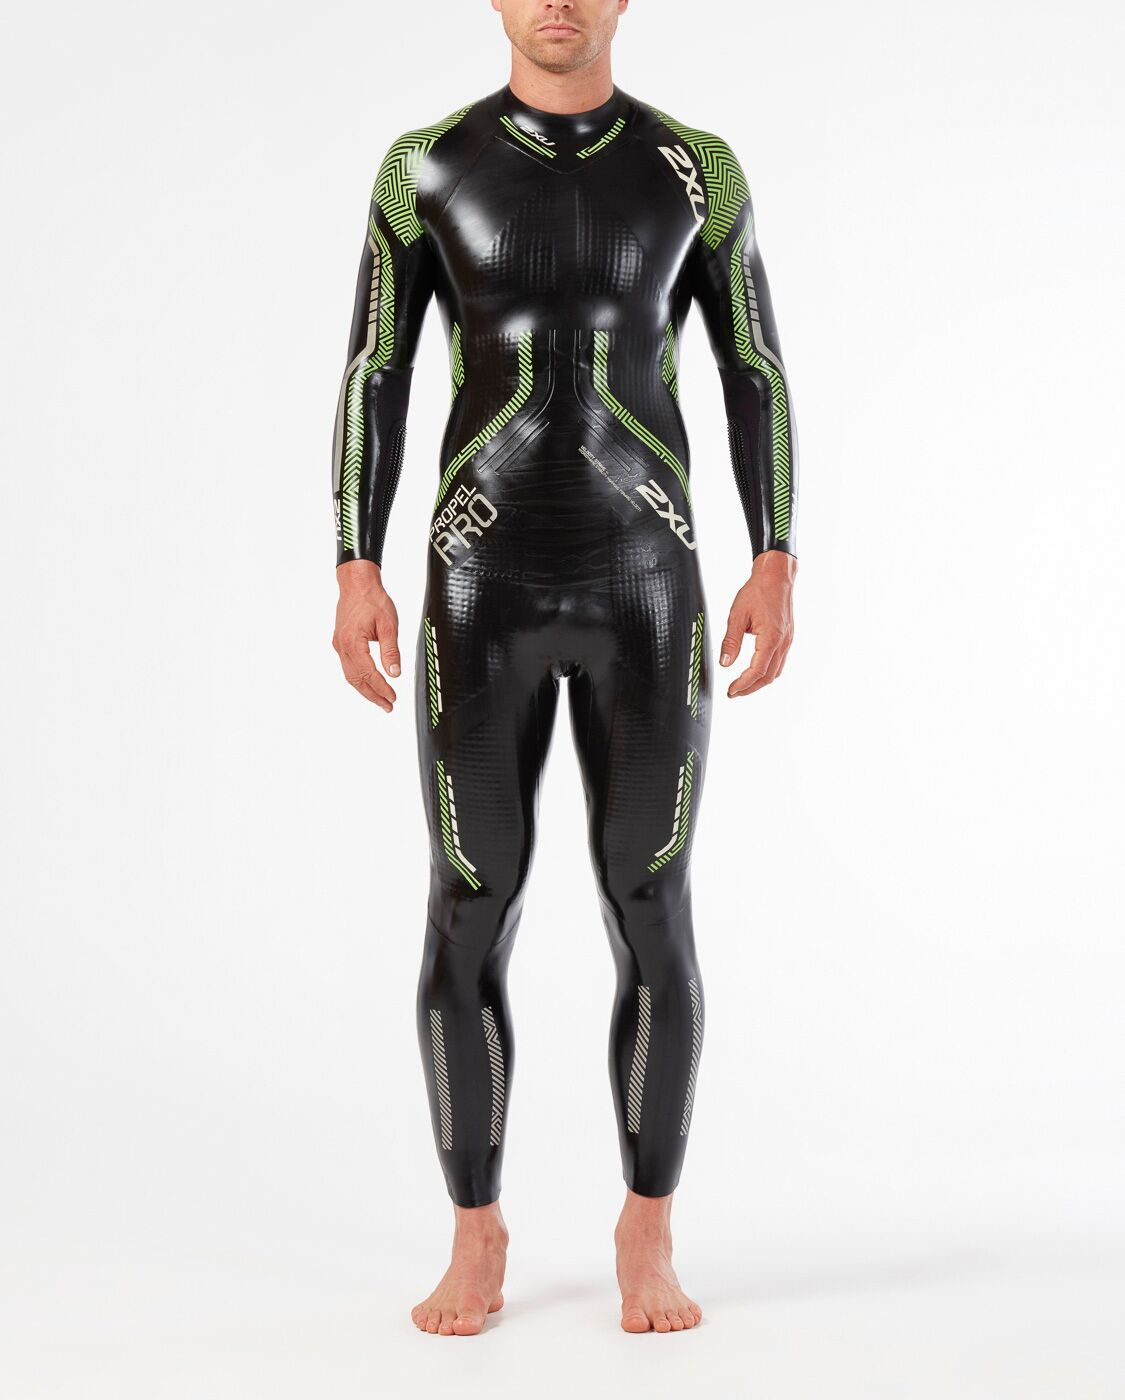 2XU South Africa - Men's Propel:Pro Wetsuit - Black/Neon Green Gecko